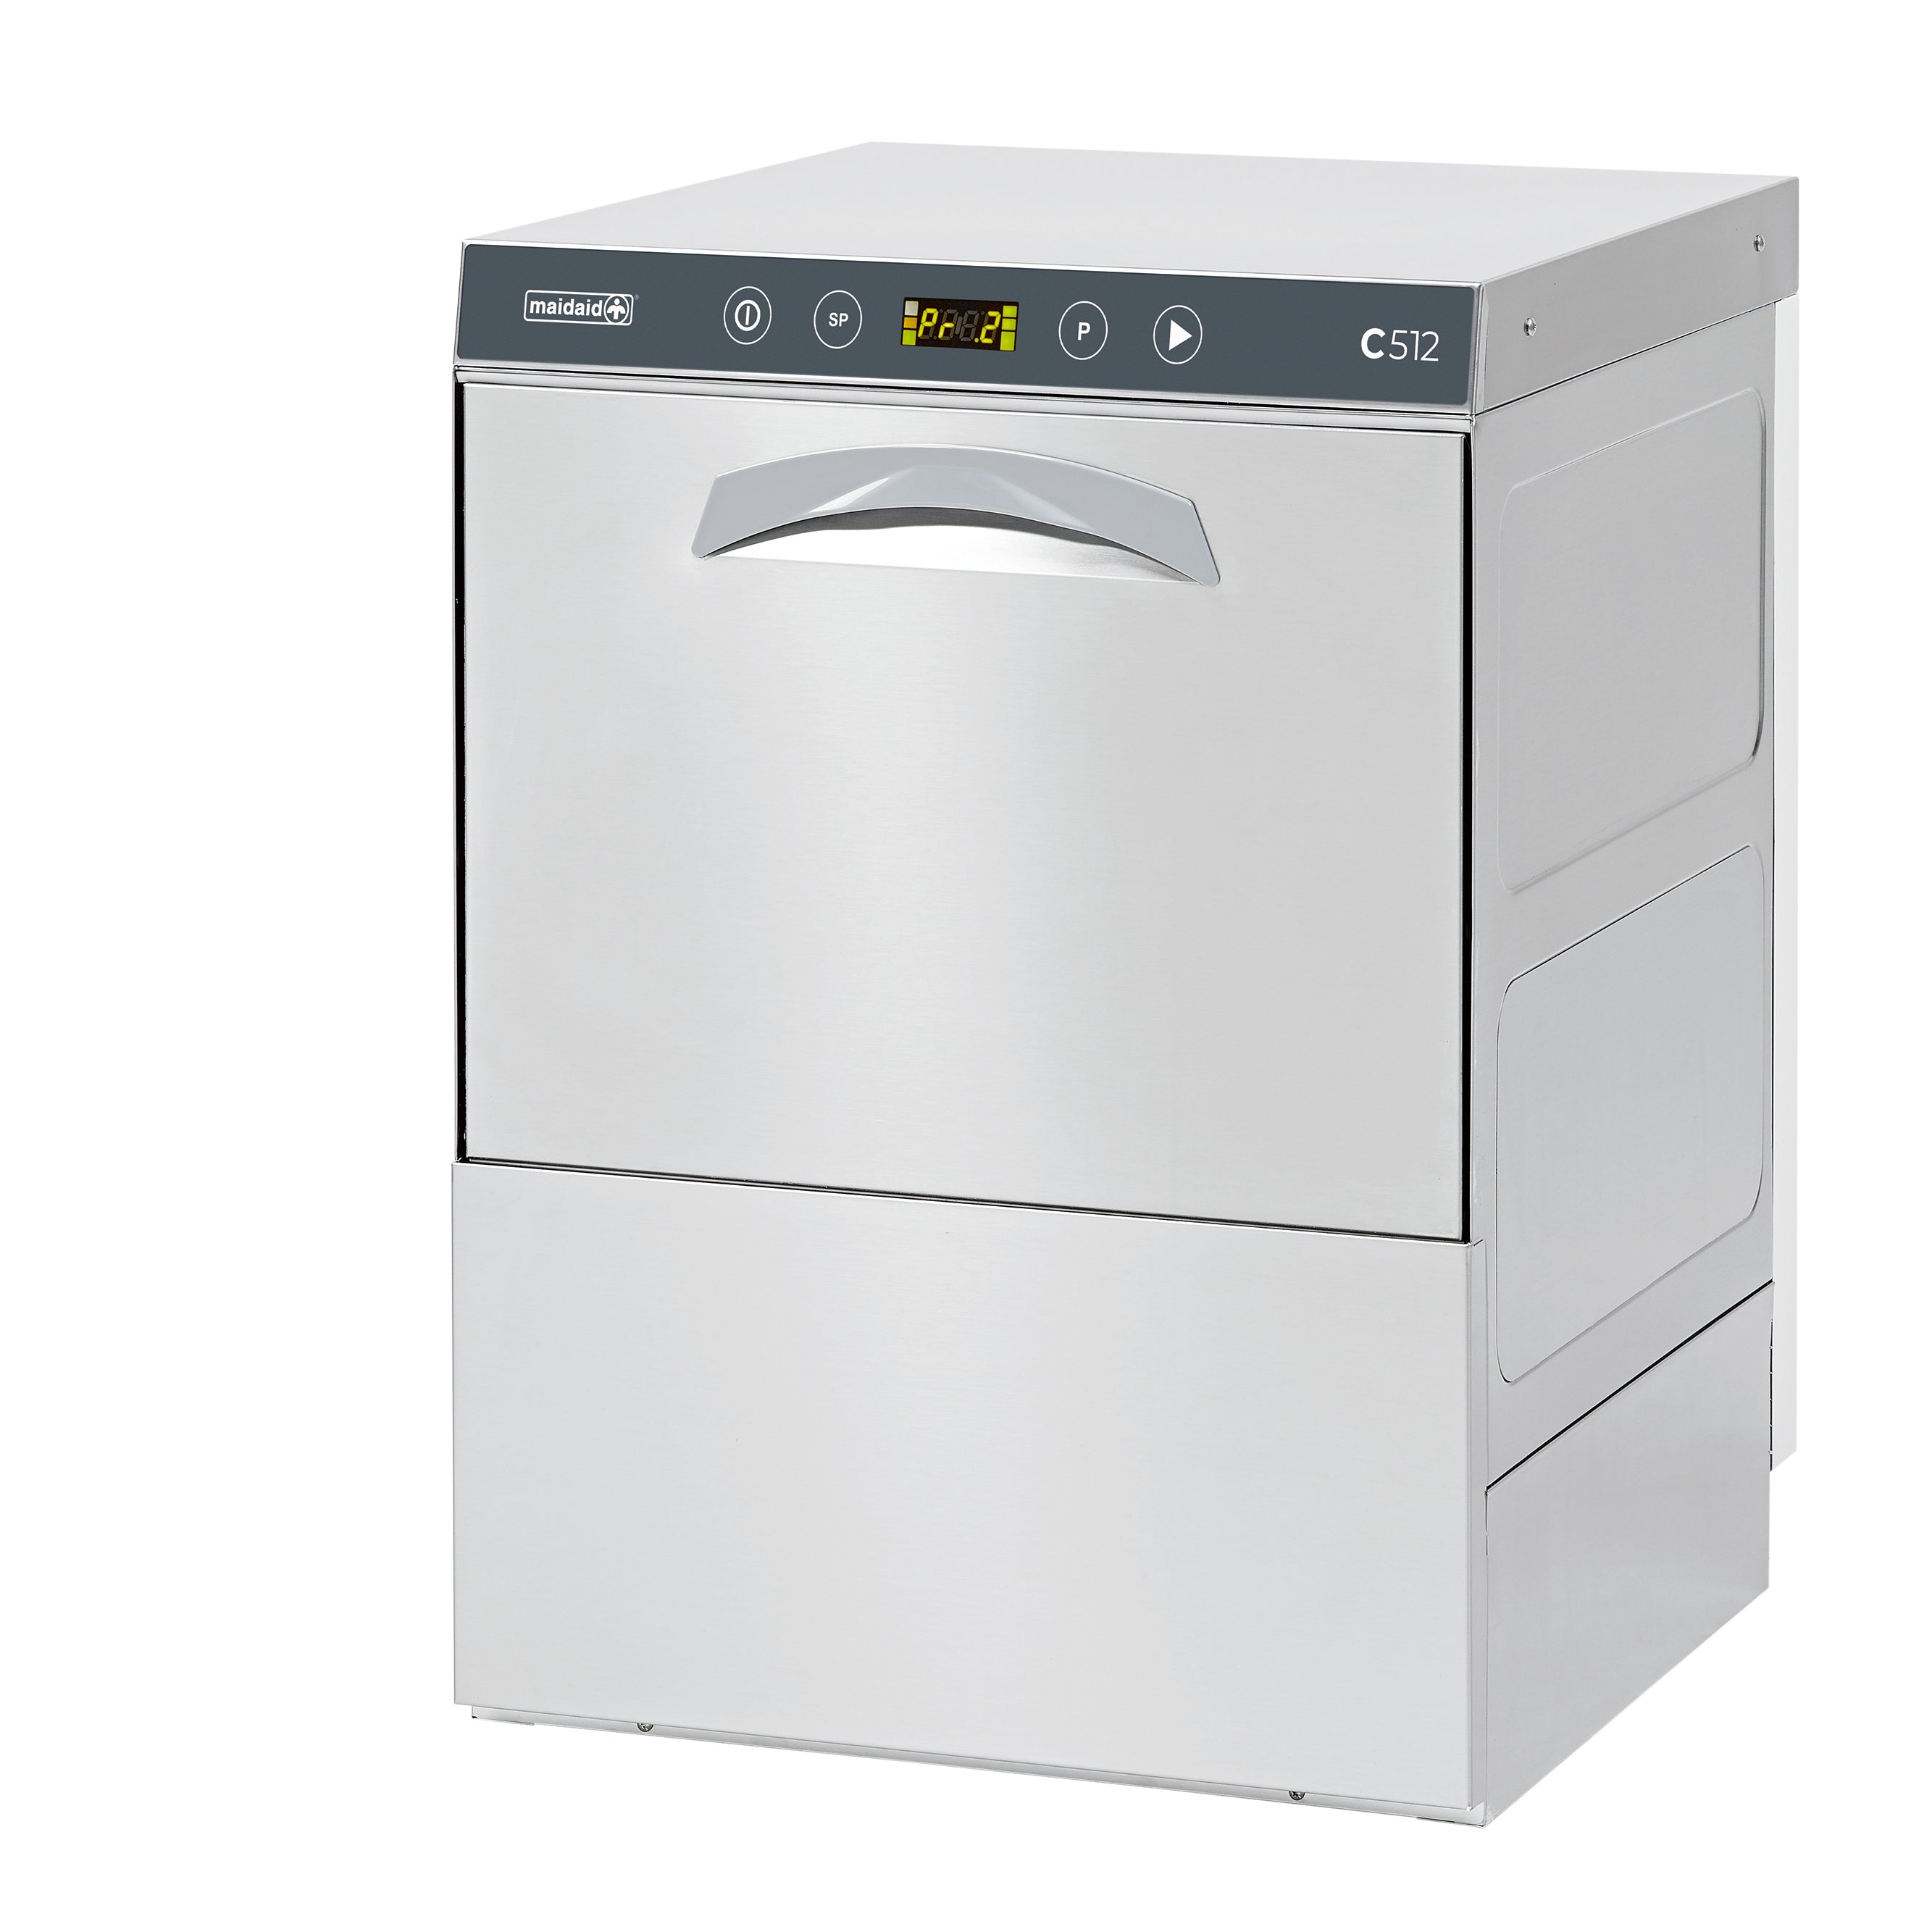 Maidaid C512/C512D Dishwasher JD Catering Equipment Solutions Ltd